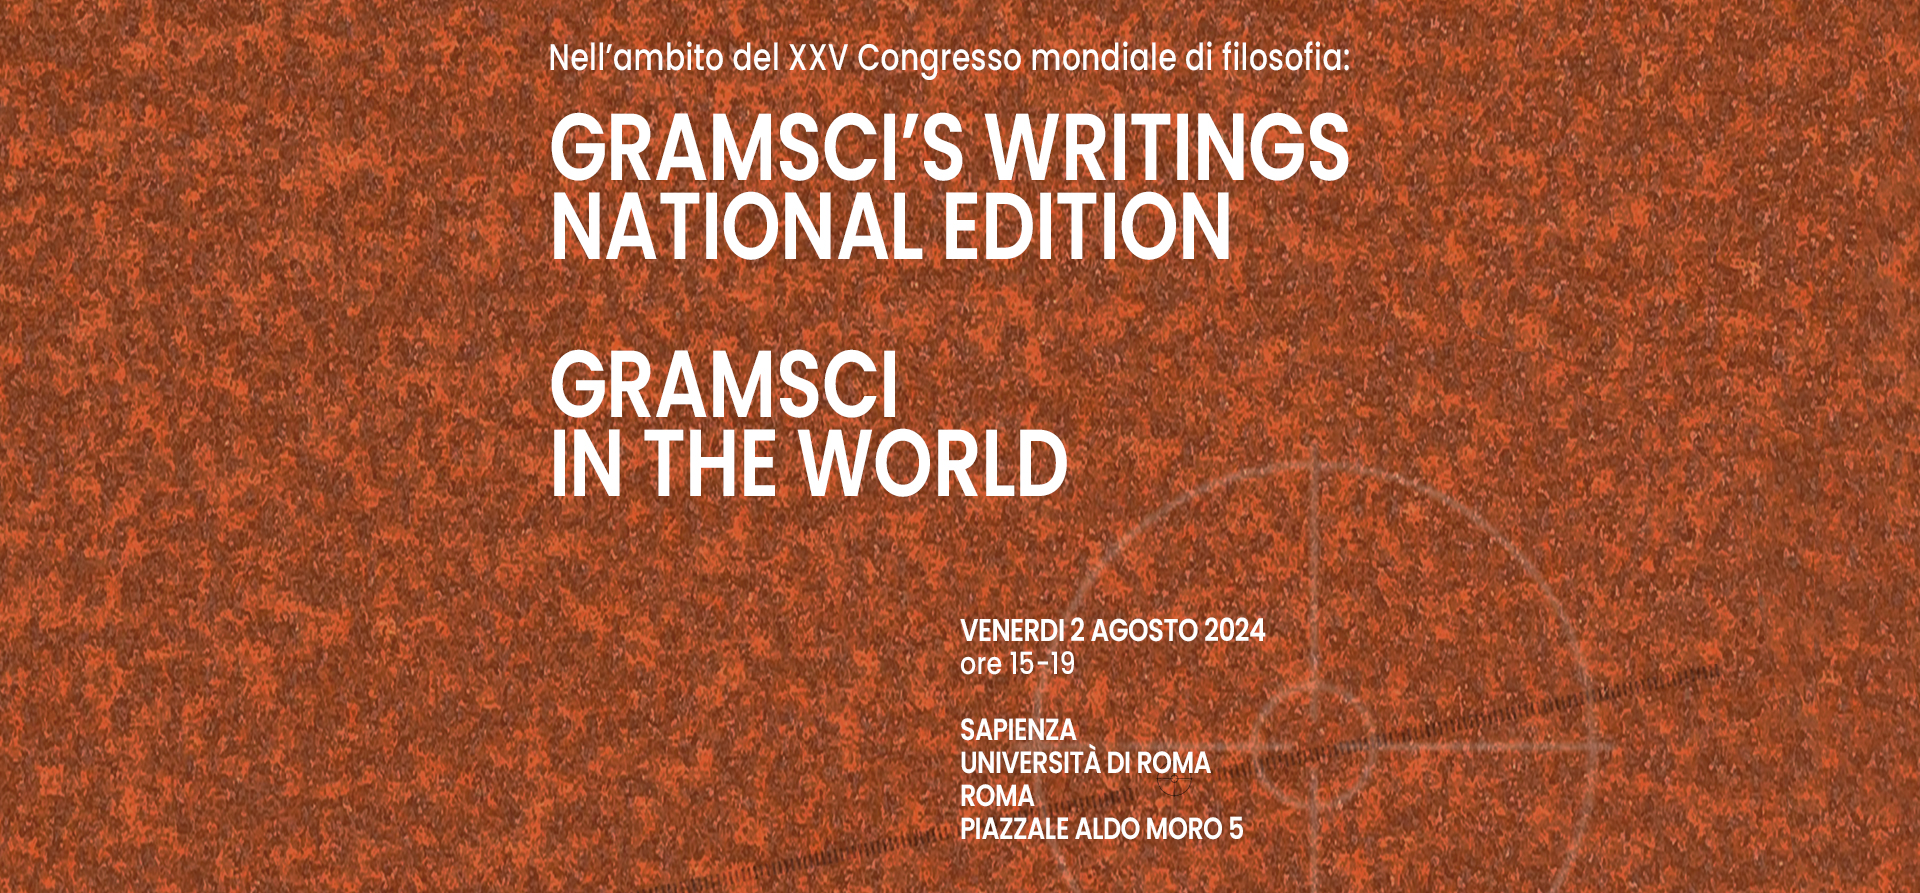 GRAMSCI’S WRITINGS NATIONAL EDITION/GRAMSCI IN THE WORLD